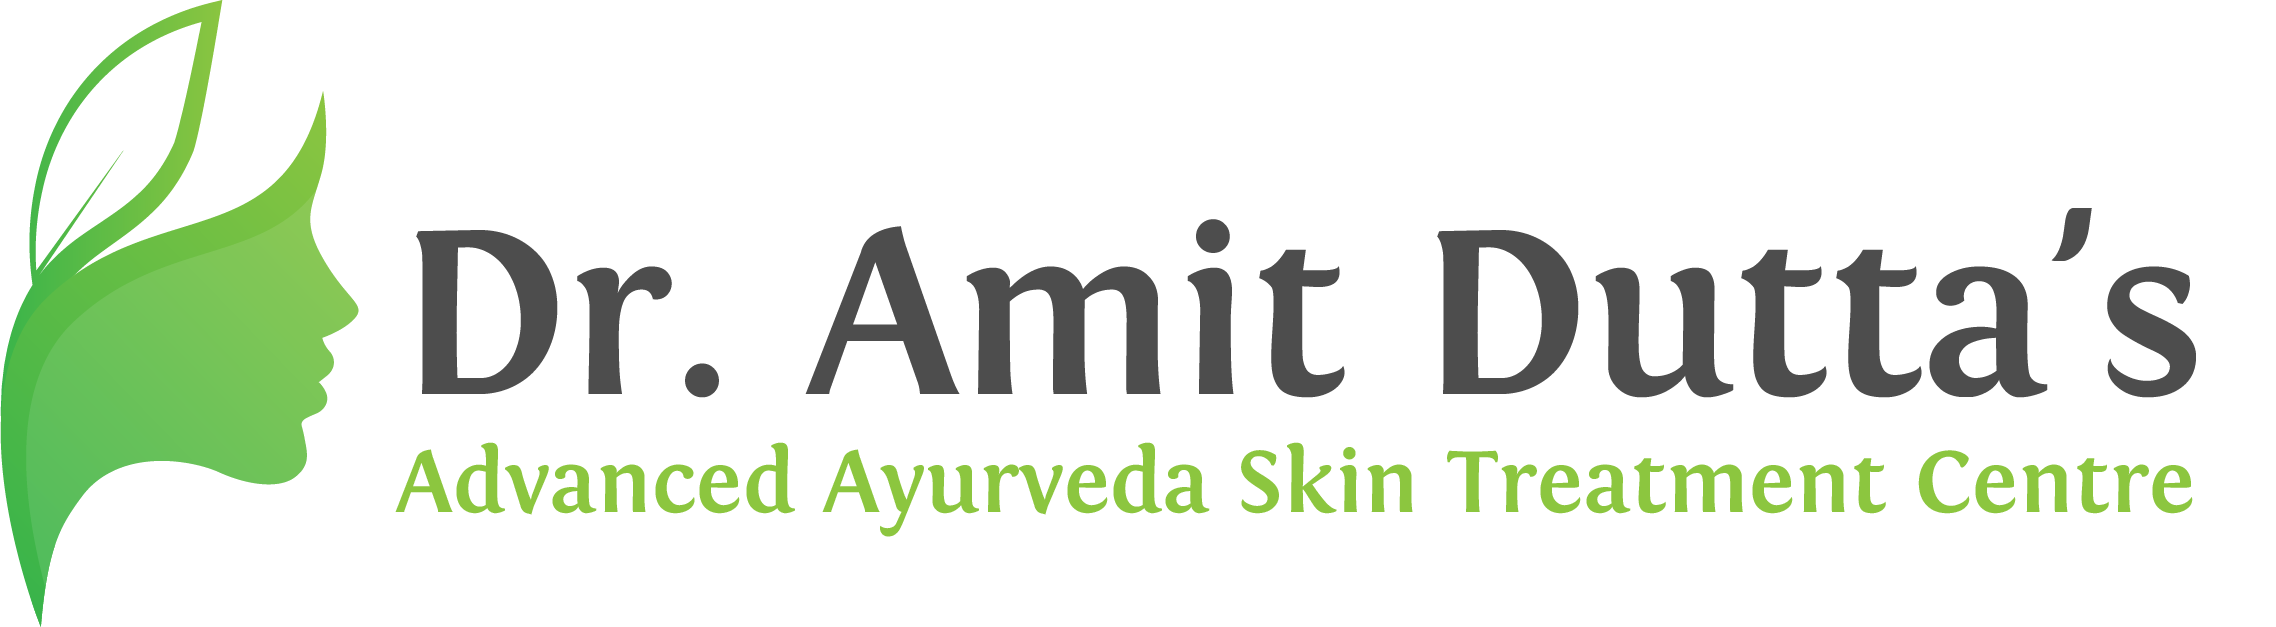 Dr. Amit Dutta